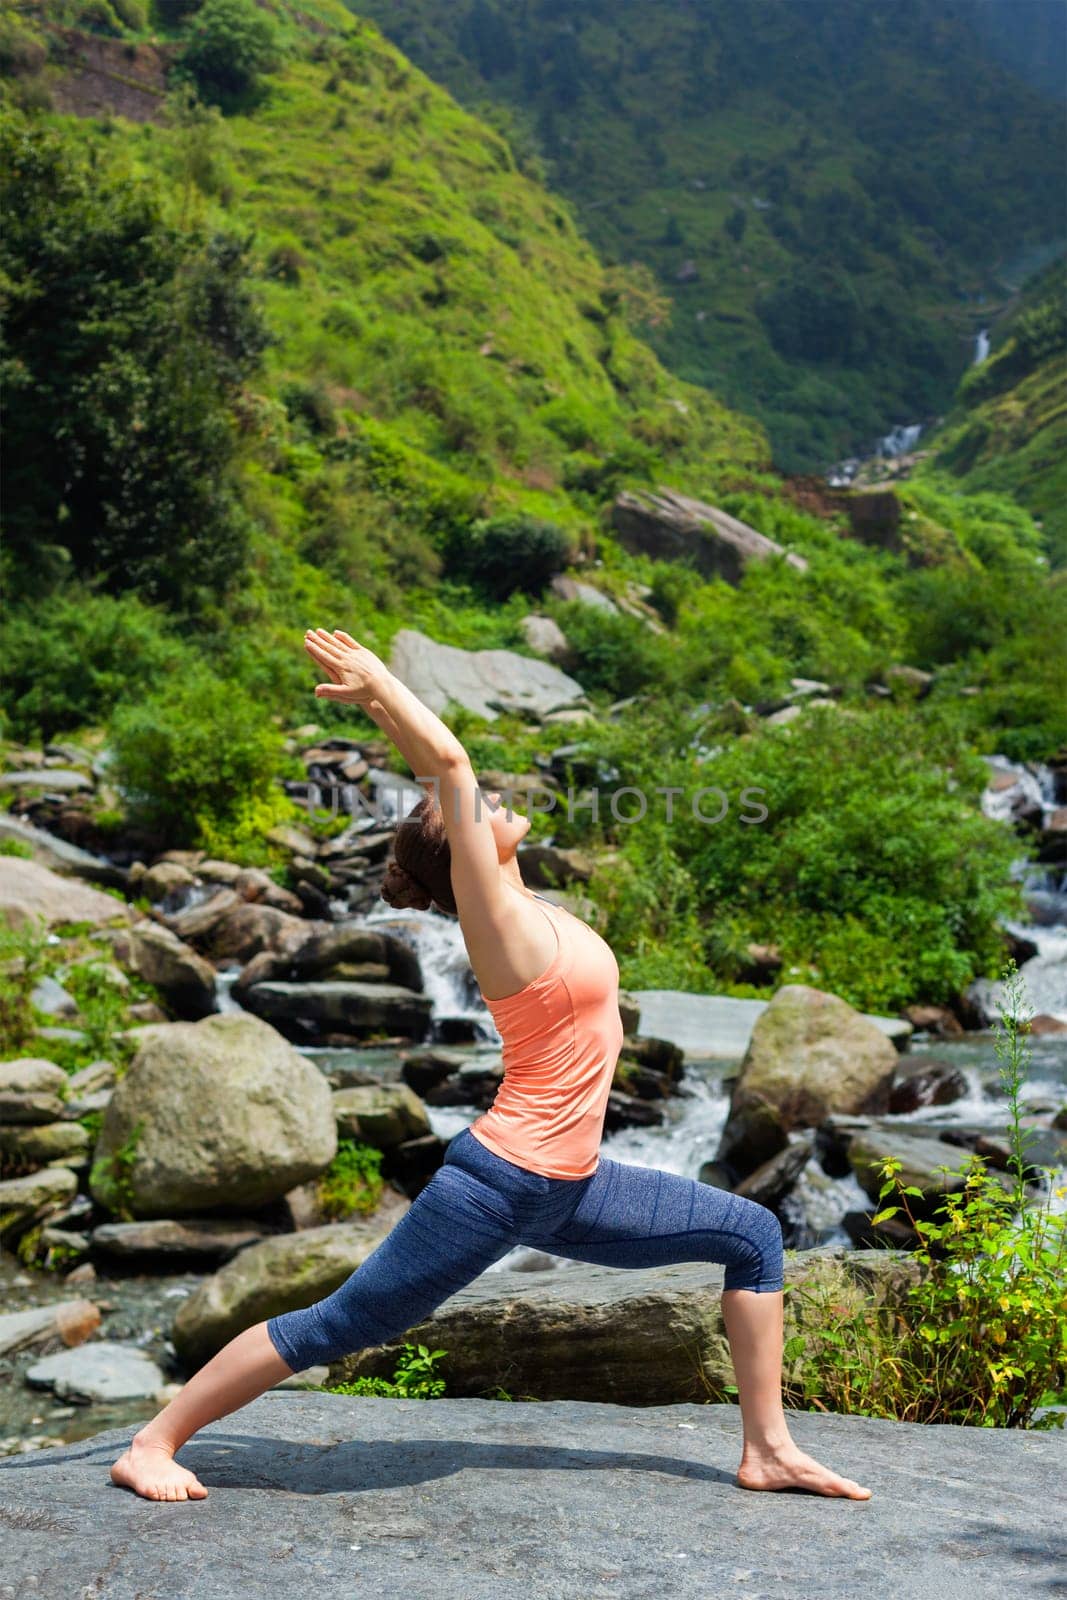 Woman doing Ashtanga Vinyasa Yoga asana Virabhadrasana 1 Warrior by dimol